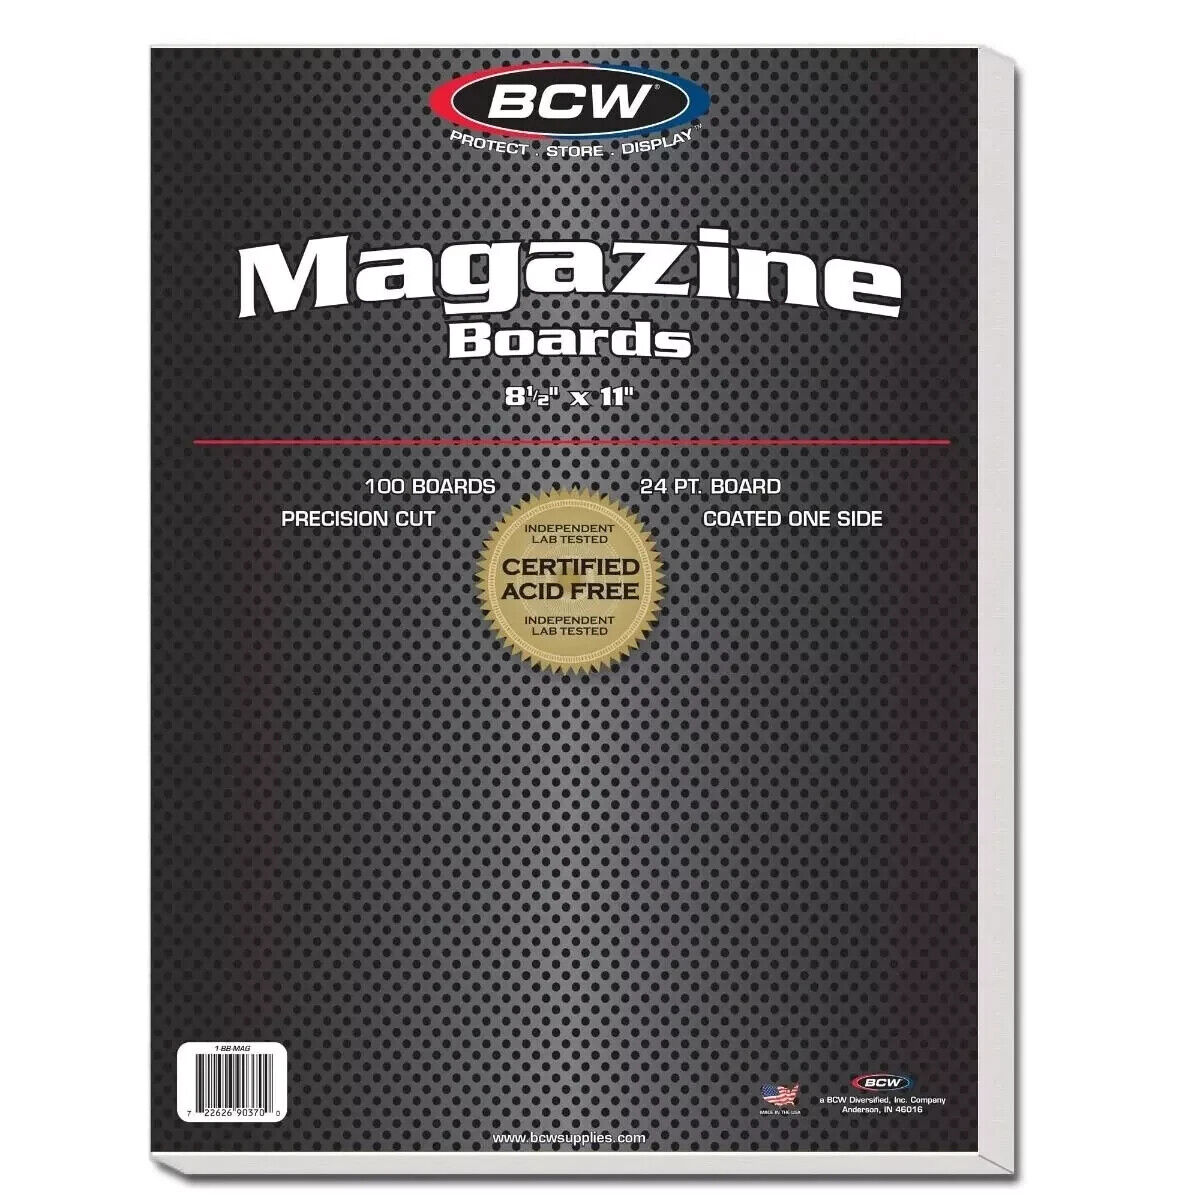 100 BCW Magazine Boards 8.5x11 Backing Board Acid Free Archival Quality